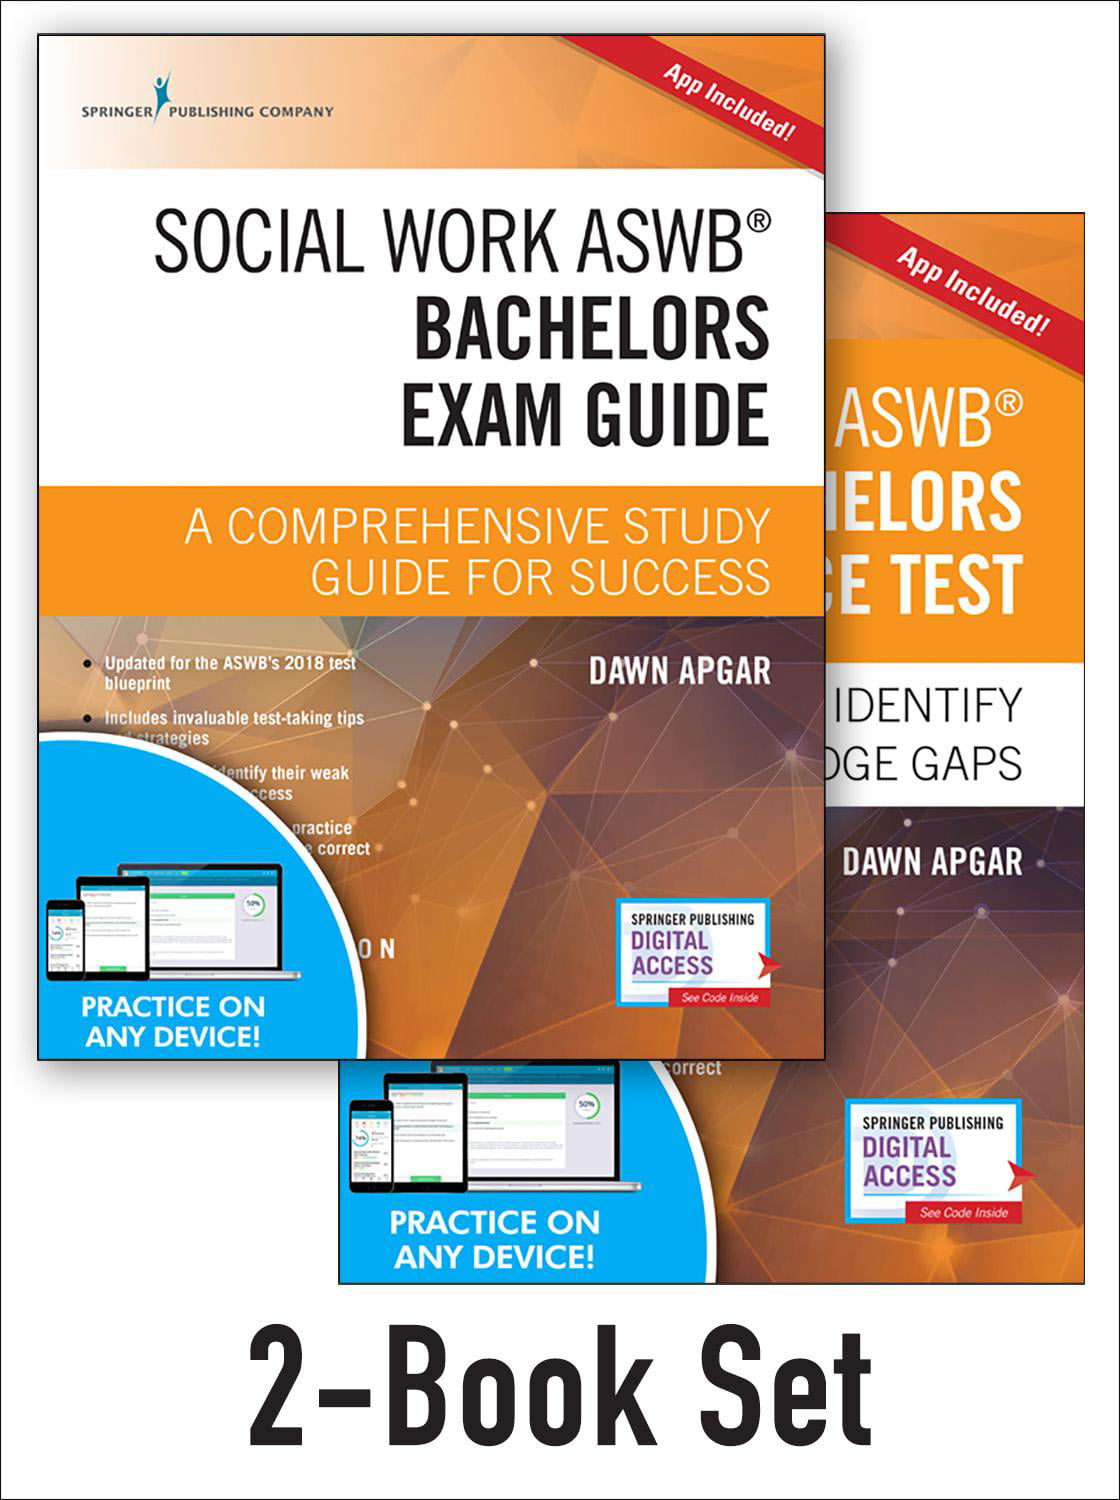 Social Work ASWB Bachelors Exam Guide A Comprehensive Study Guide for Success